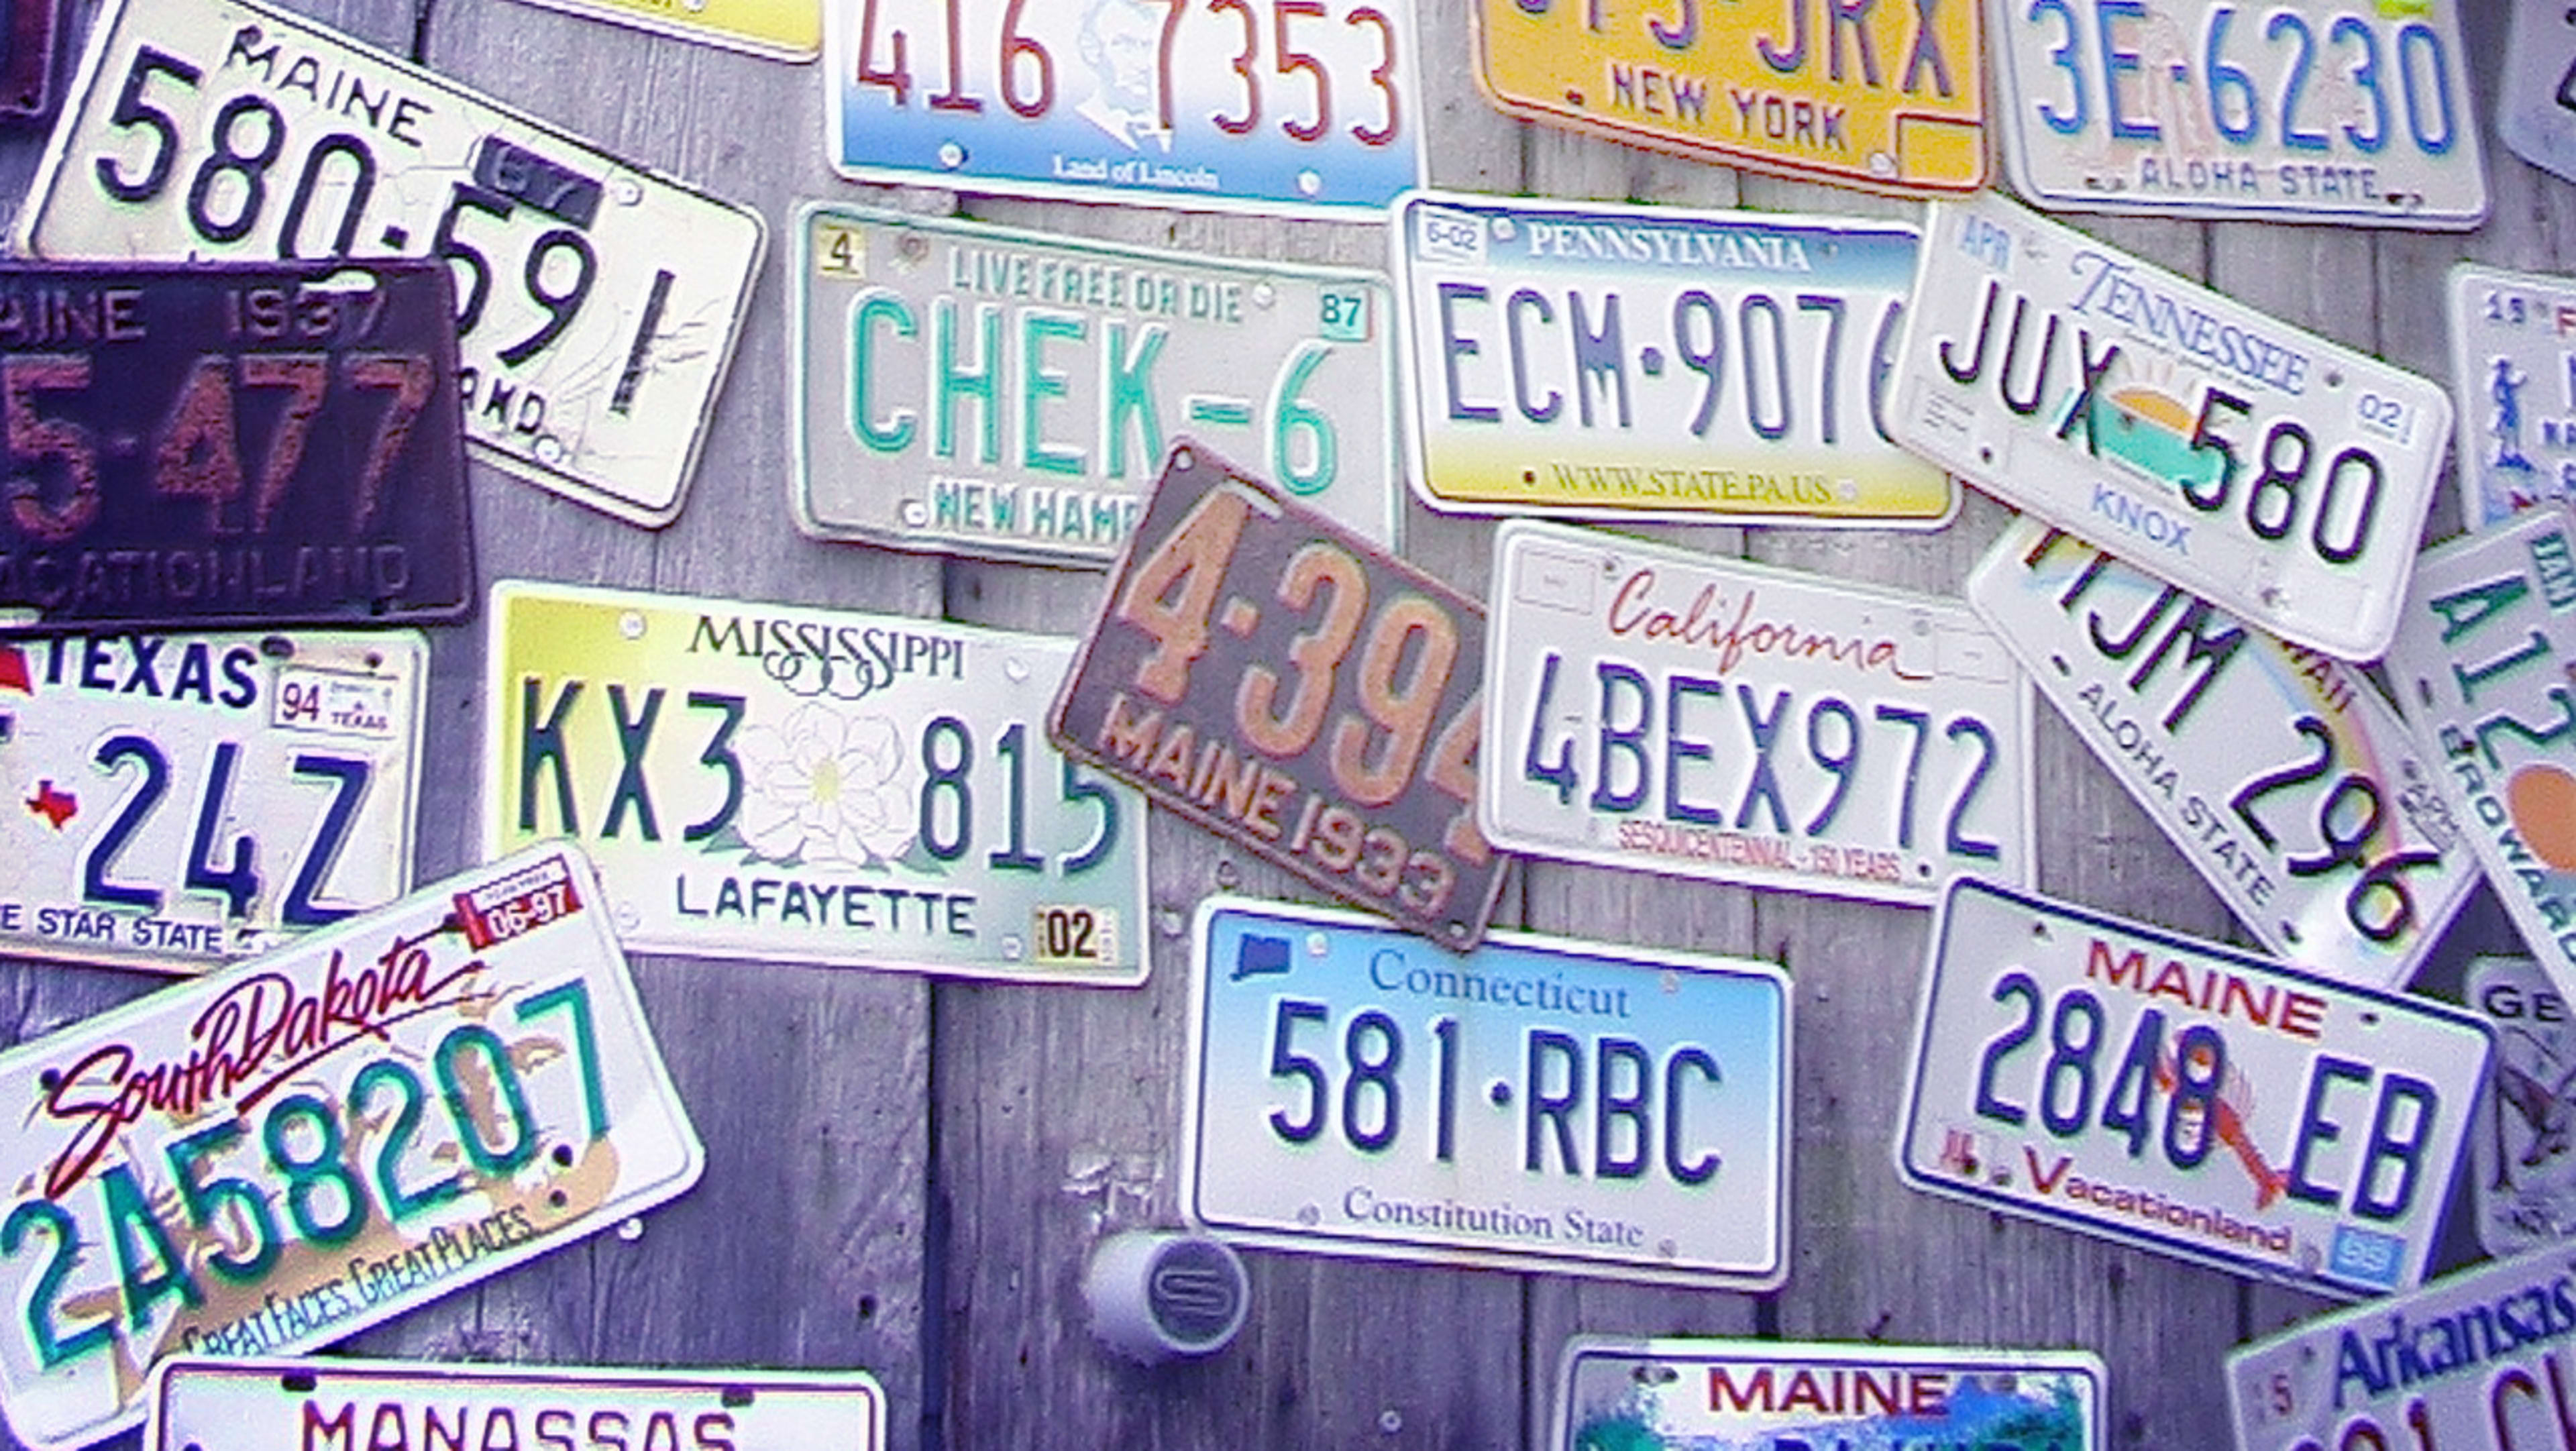 Sacramento has been tracking license plates to monitor welfare recipients